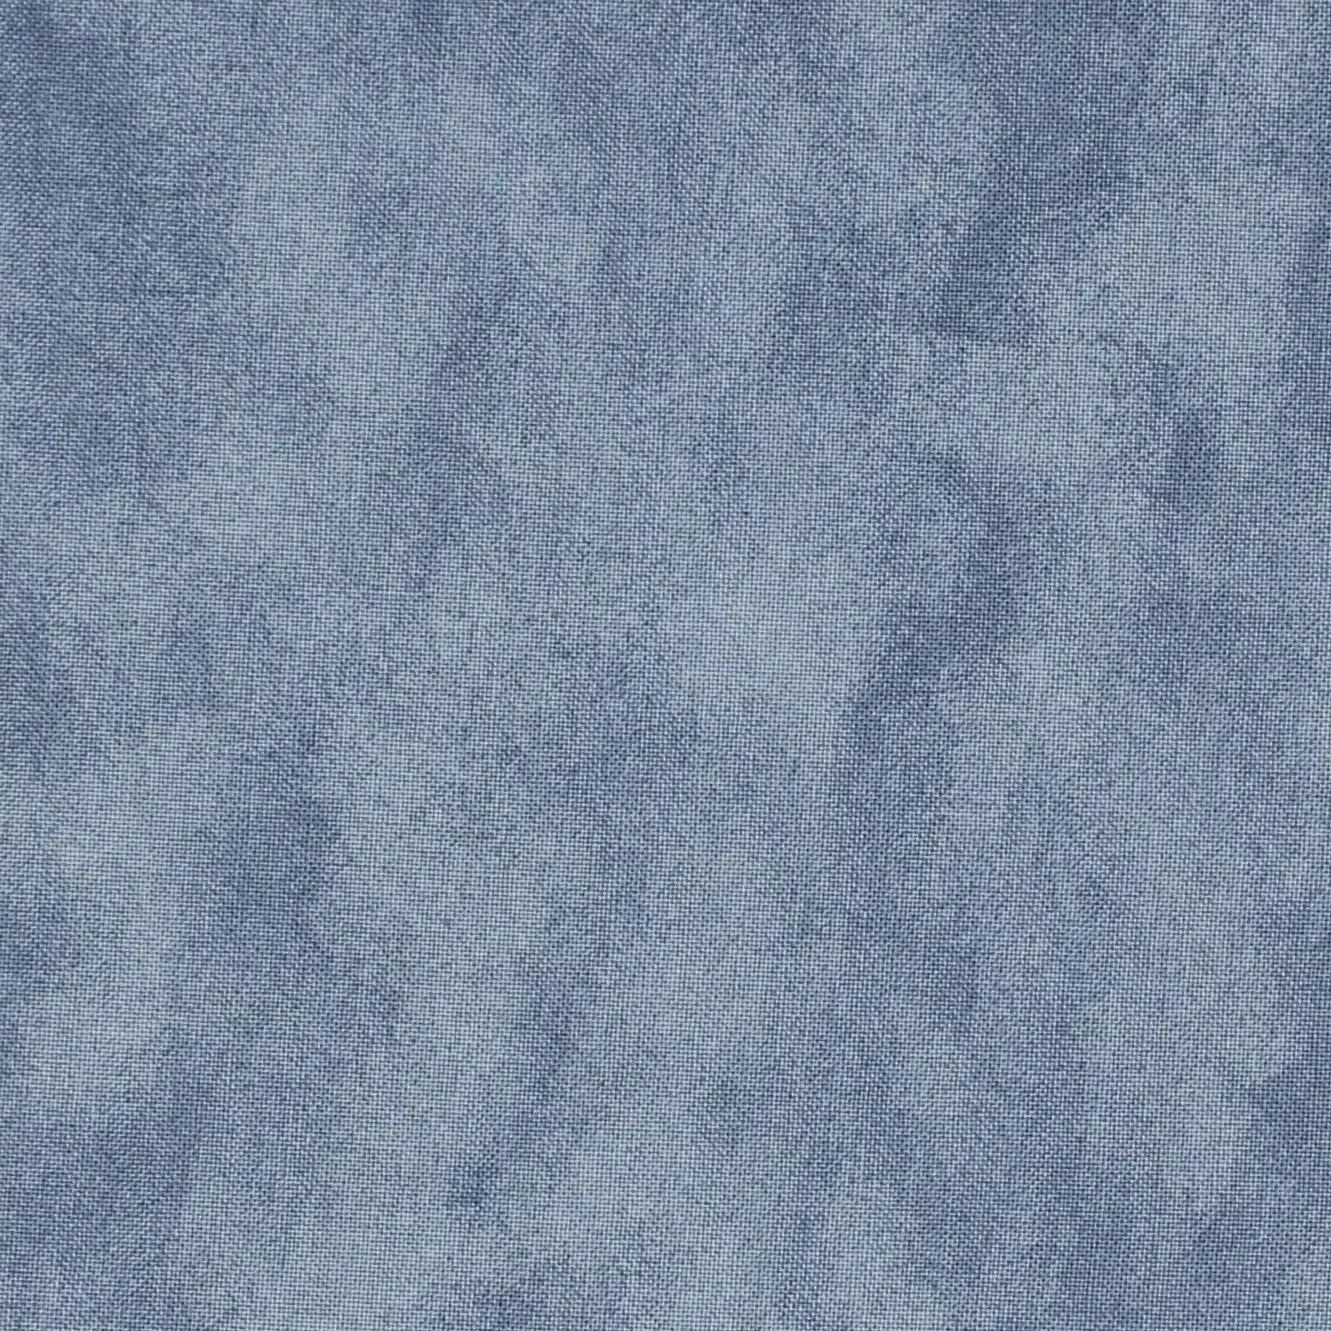 Grey Dark Color Waves Cotton Wideback Fabric ( 1 Yard Pack )